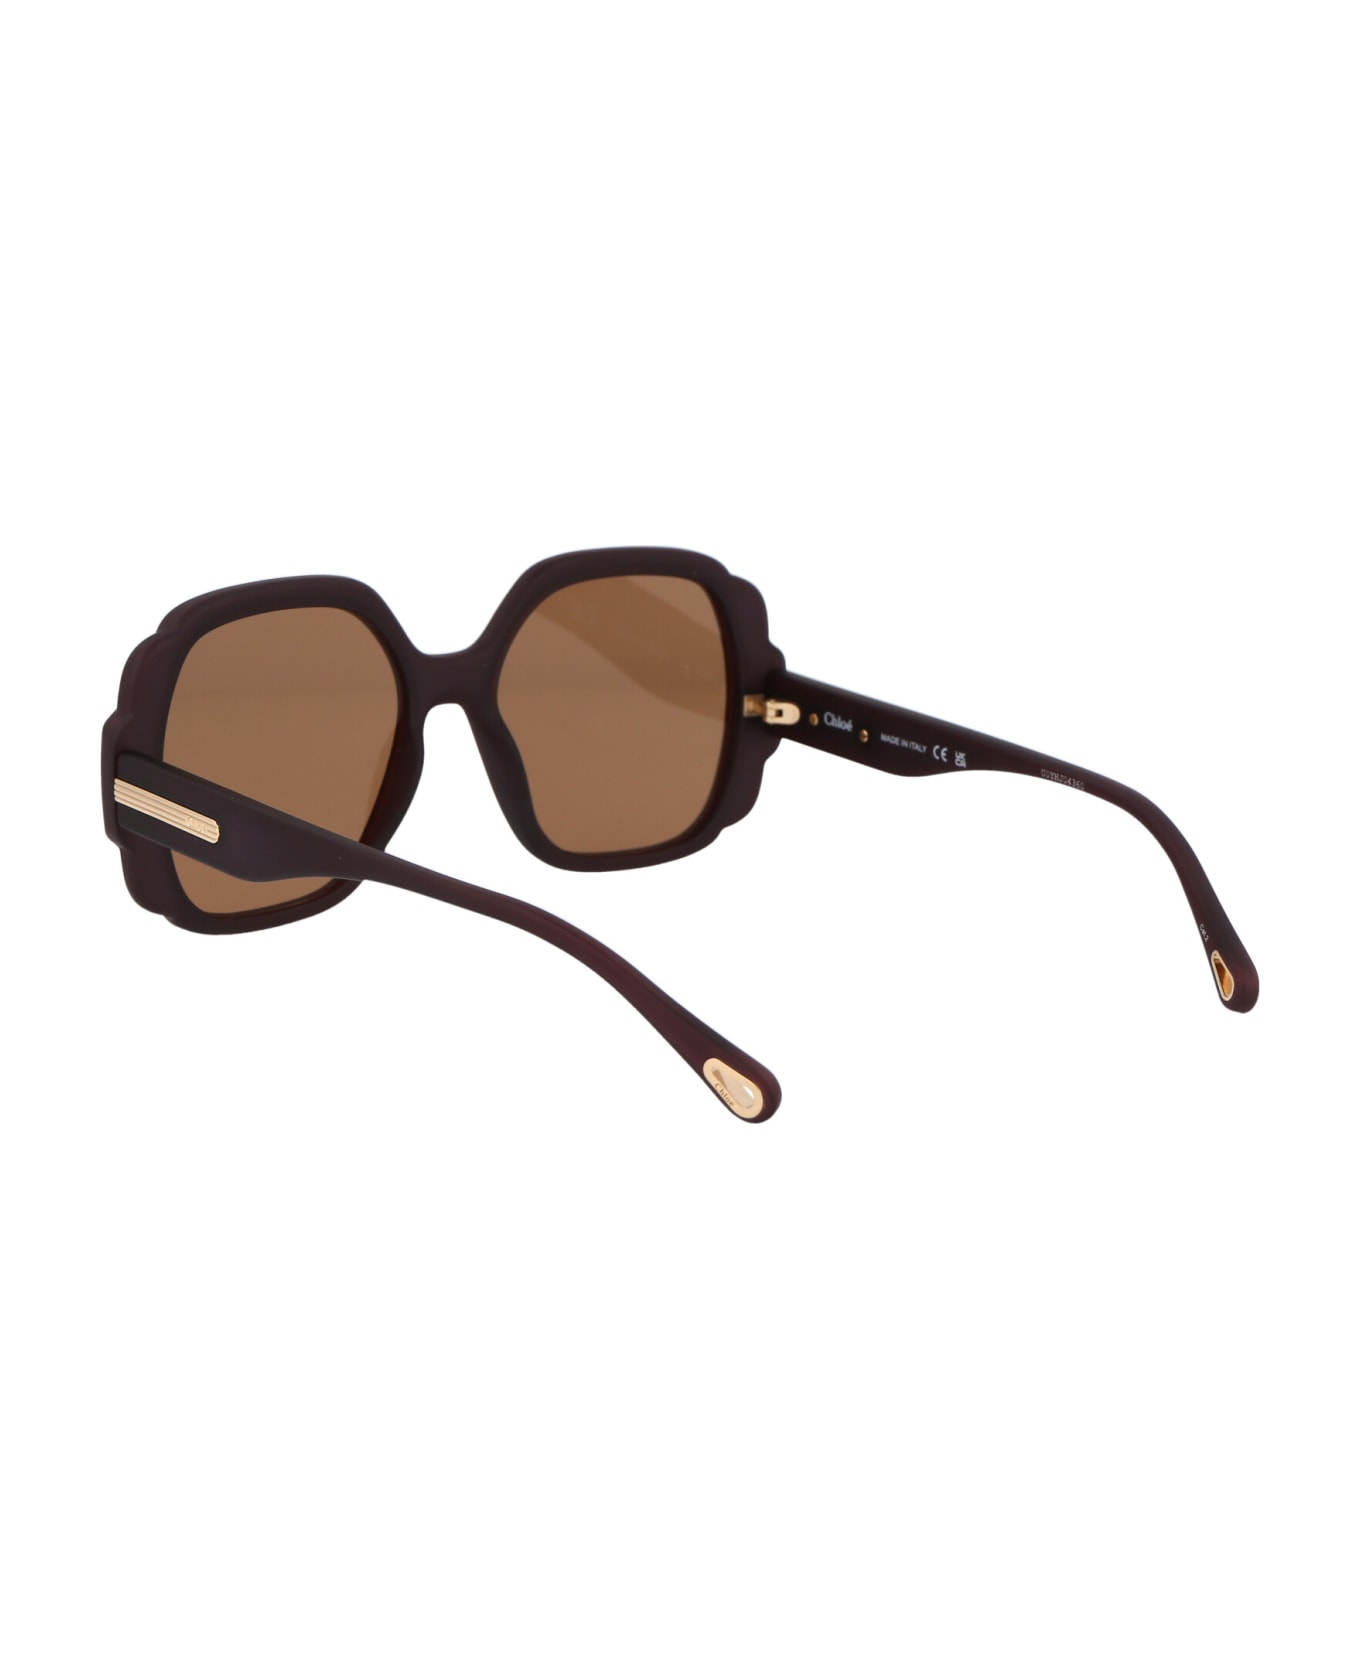 Chloé Eyewear Ch0121s Sunglasses - 001 BROWN BROWN BROWN